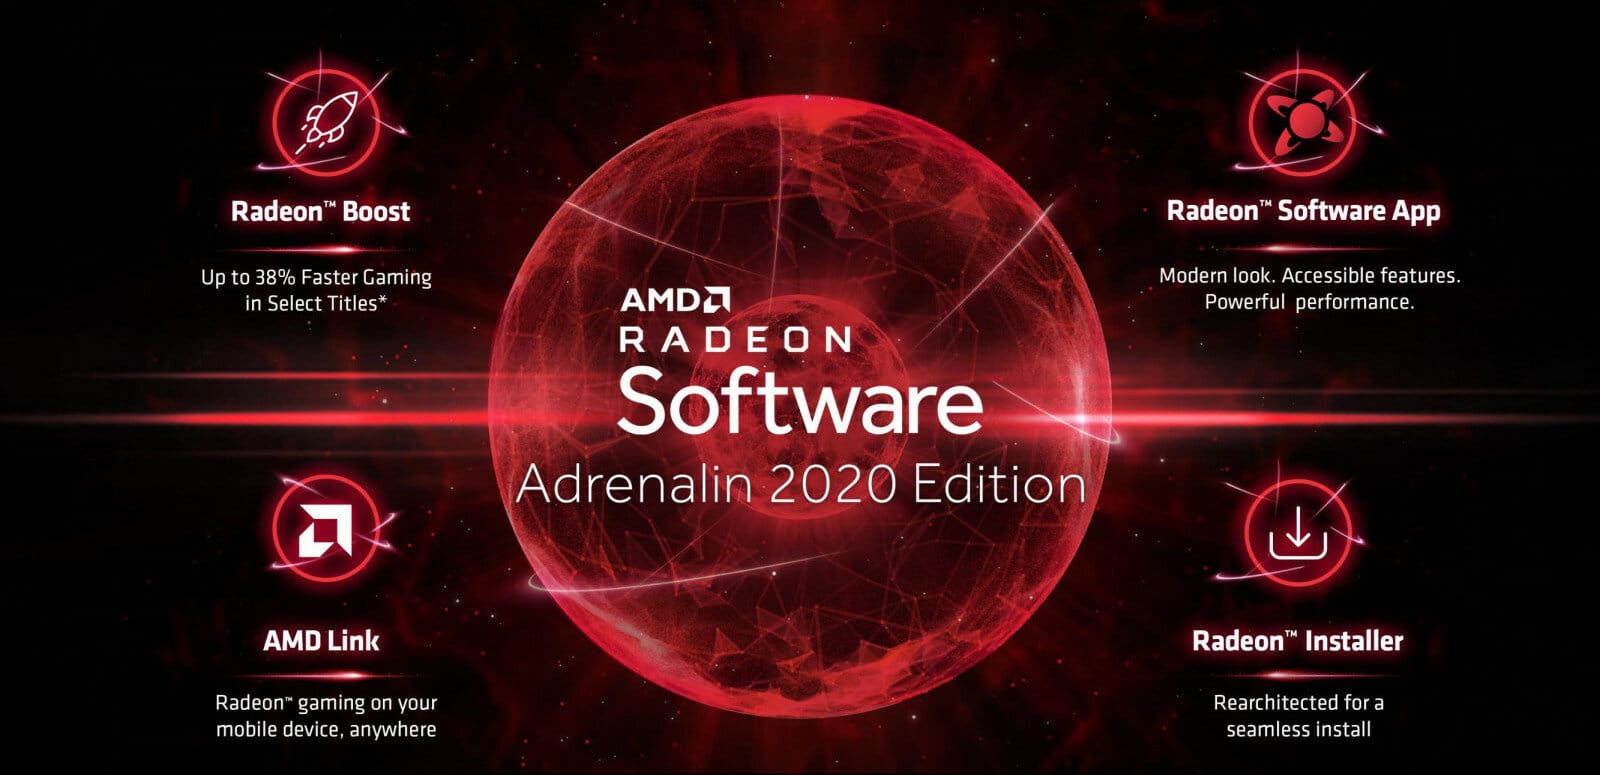 Amd Radeon Adrenalin 2020 Edition 19 12 2 Hardwarecooking